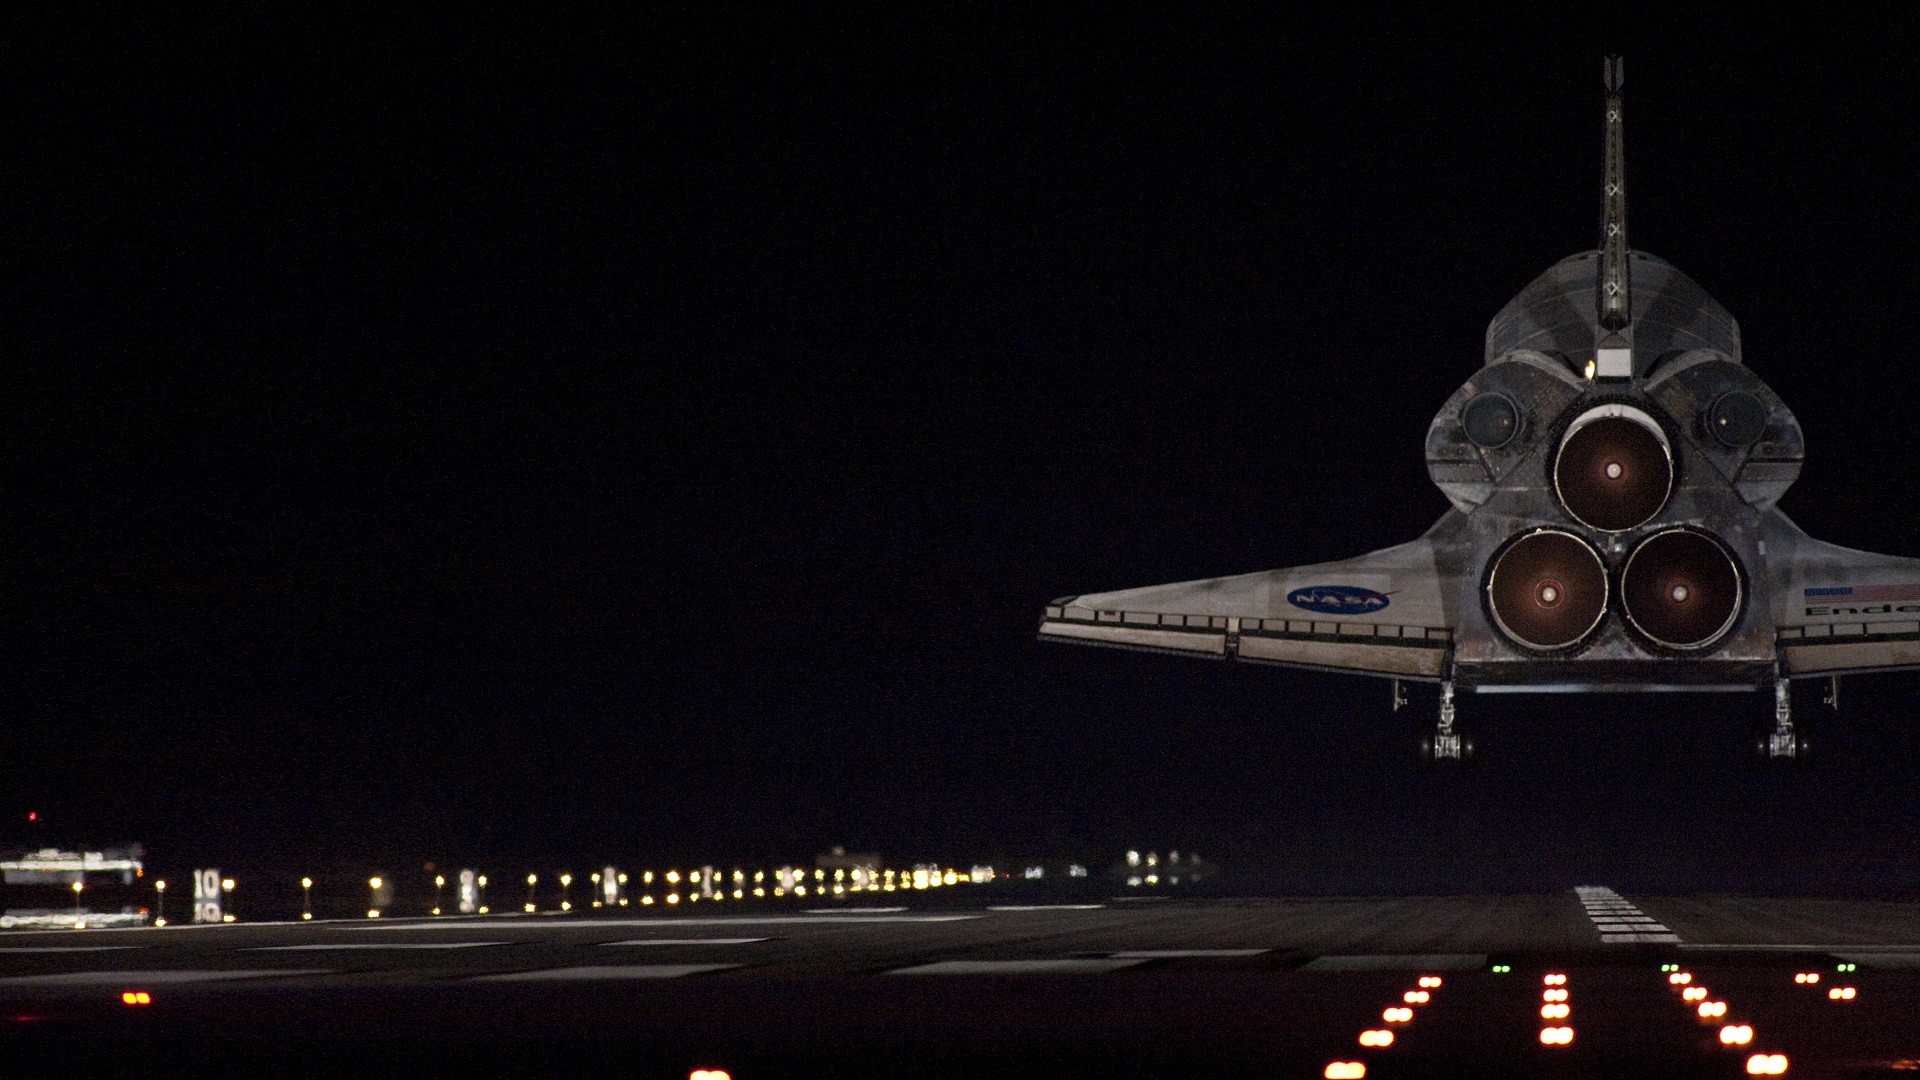 General 1920x1080 space shuttle Endeavour Space Shuttle Endeavour landing runway rear view vehicle